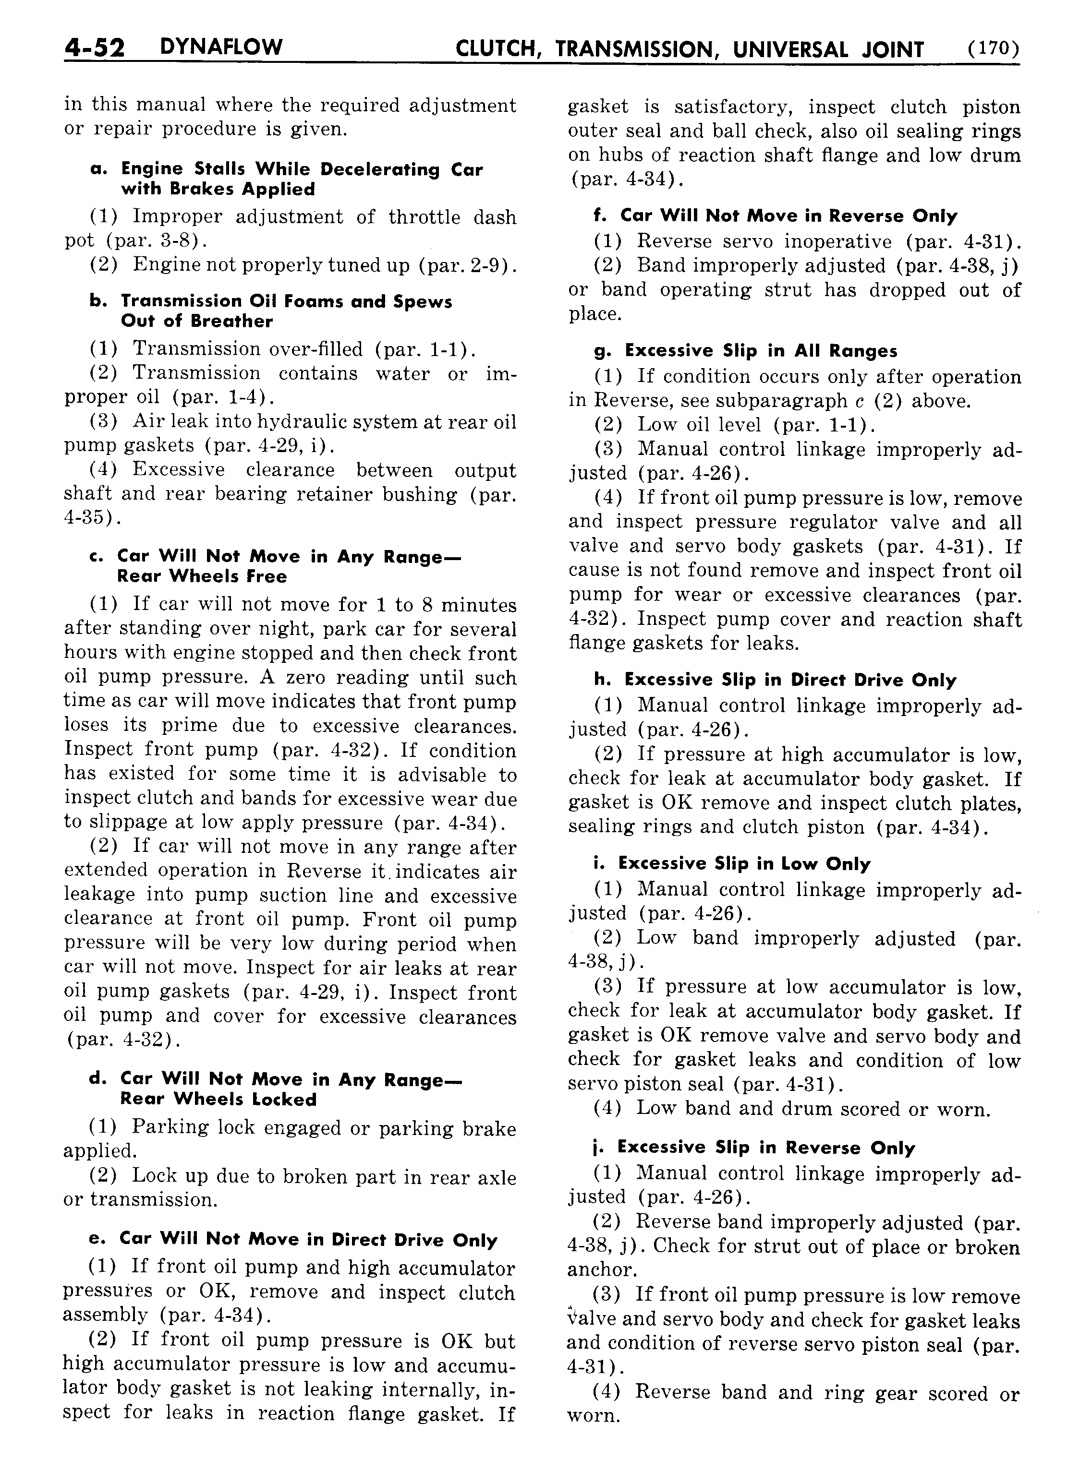 n_05 1951 Buick Shop Manual - Transmission-052-052.jpg